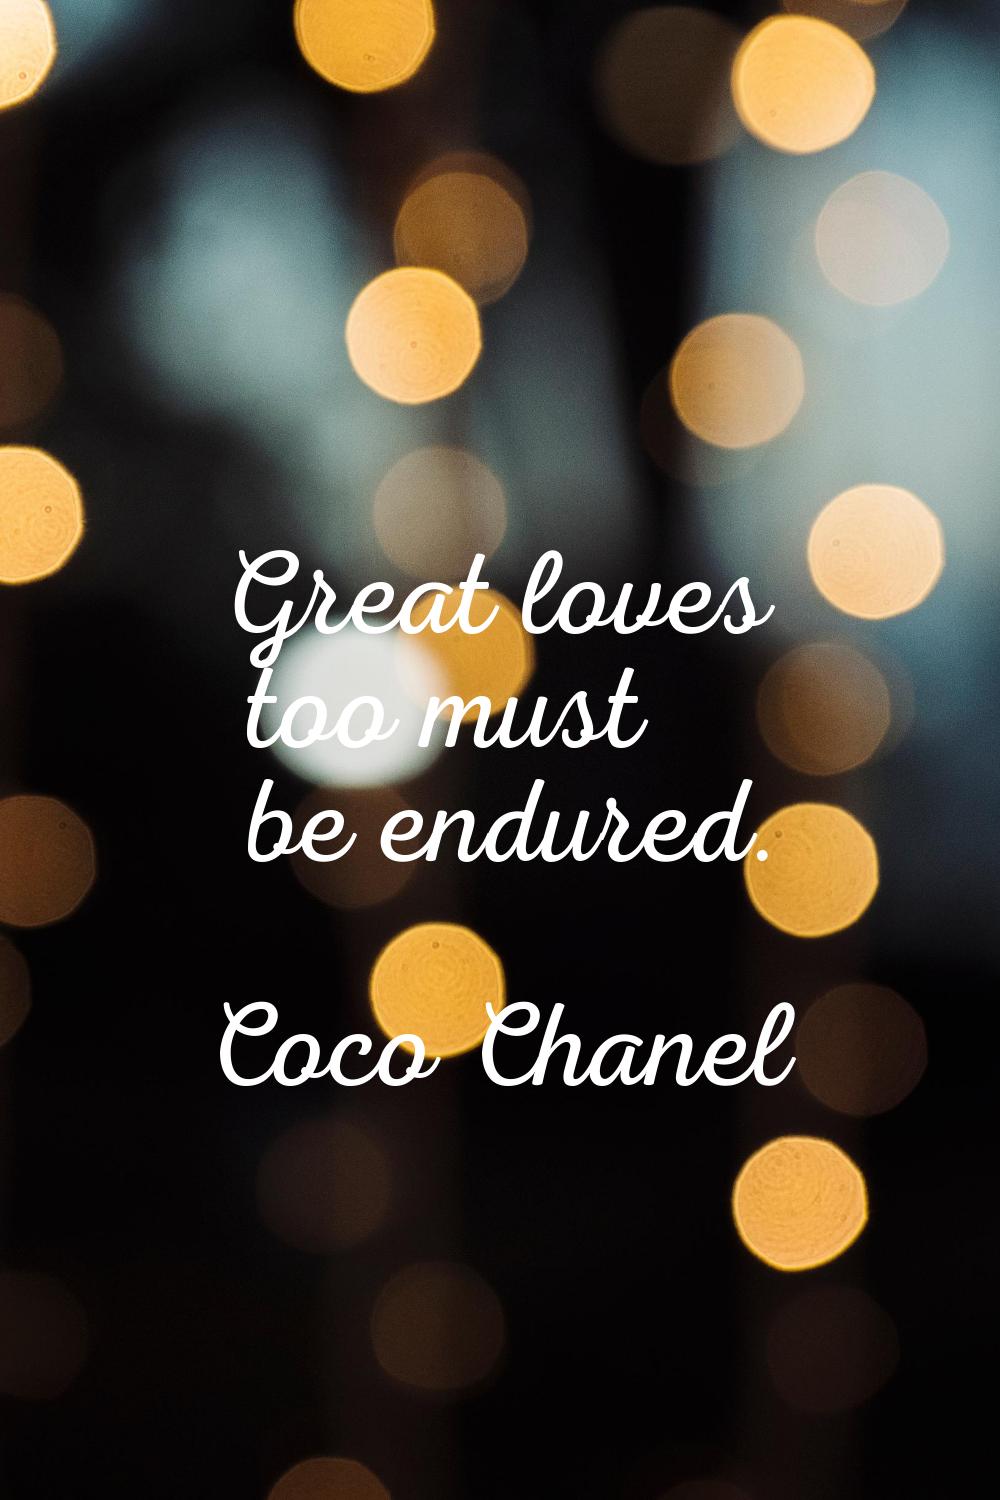 Great loves too must be endured.